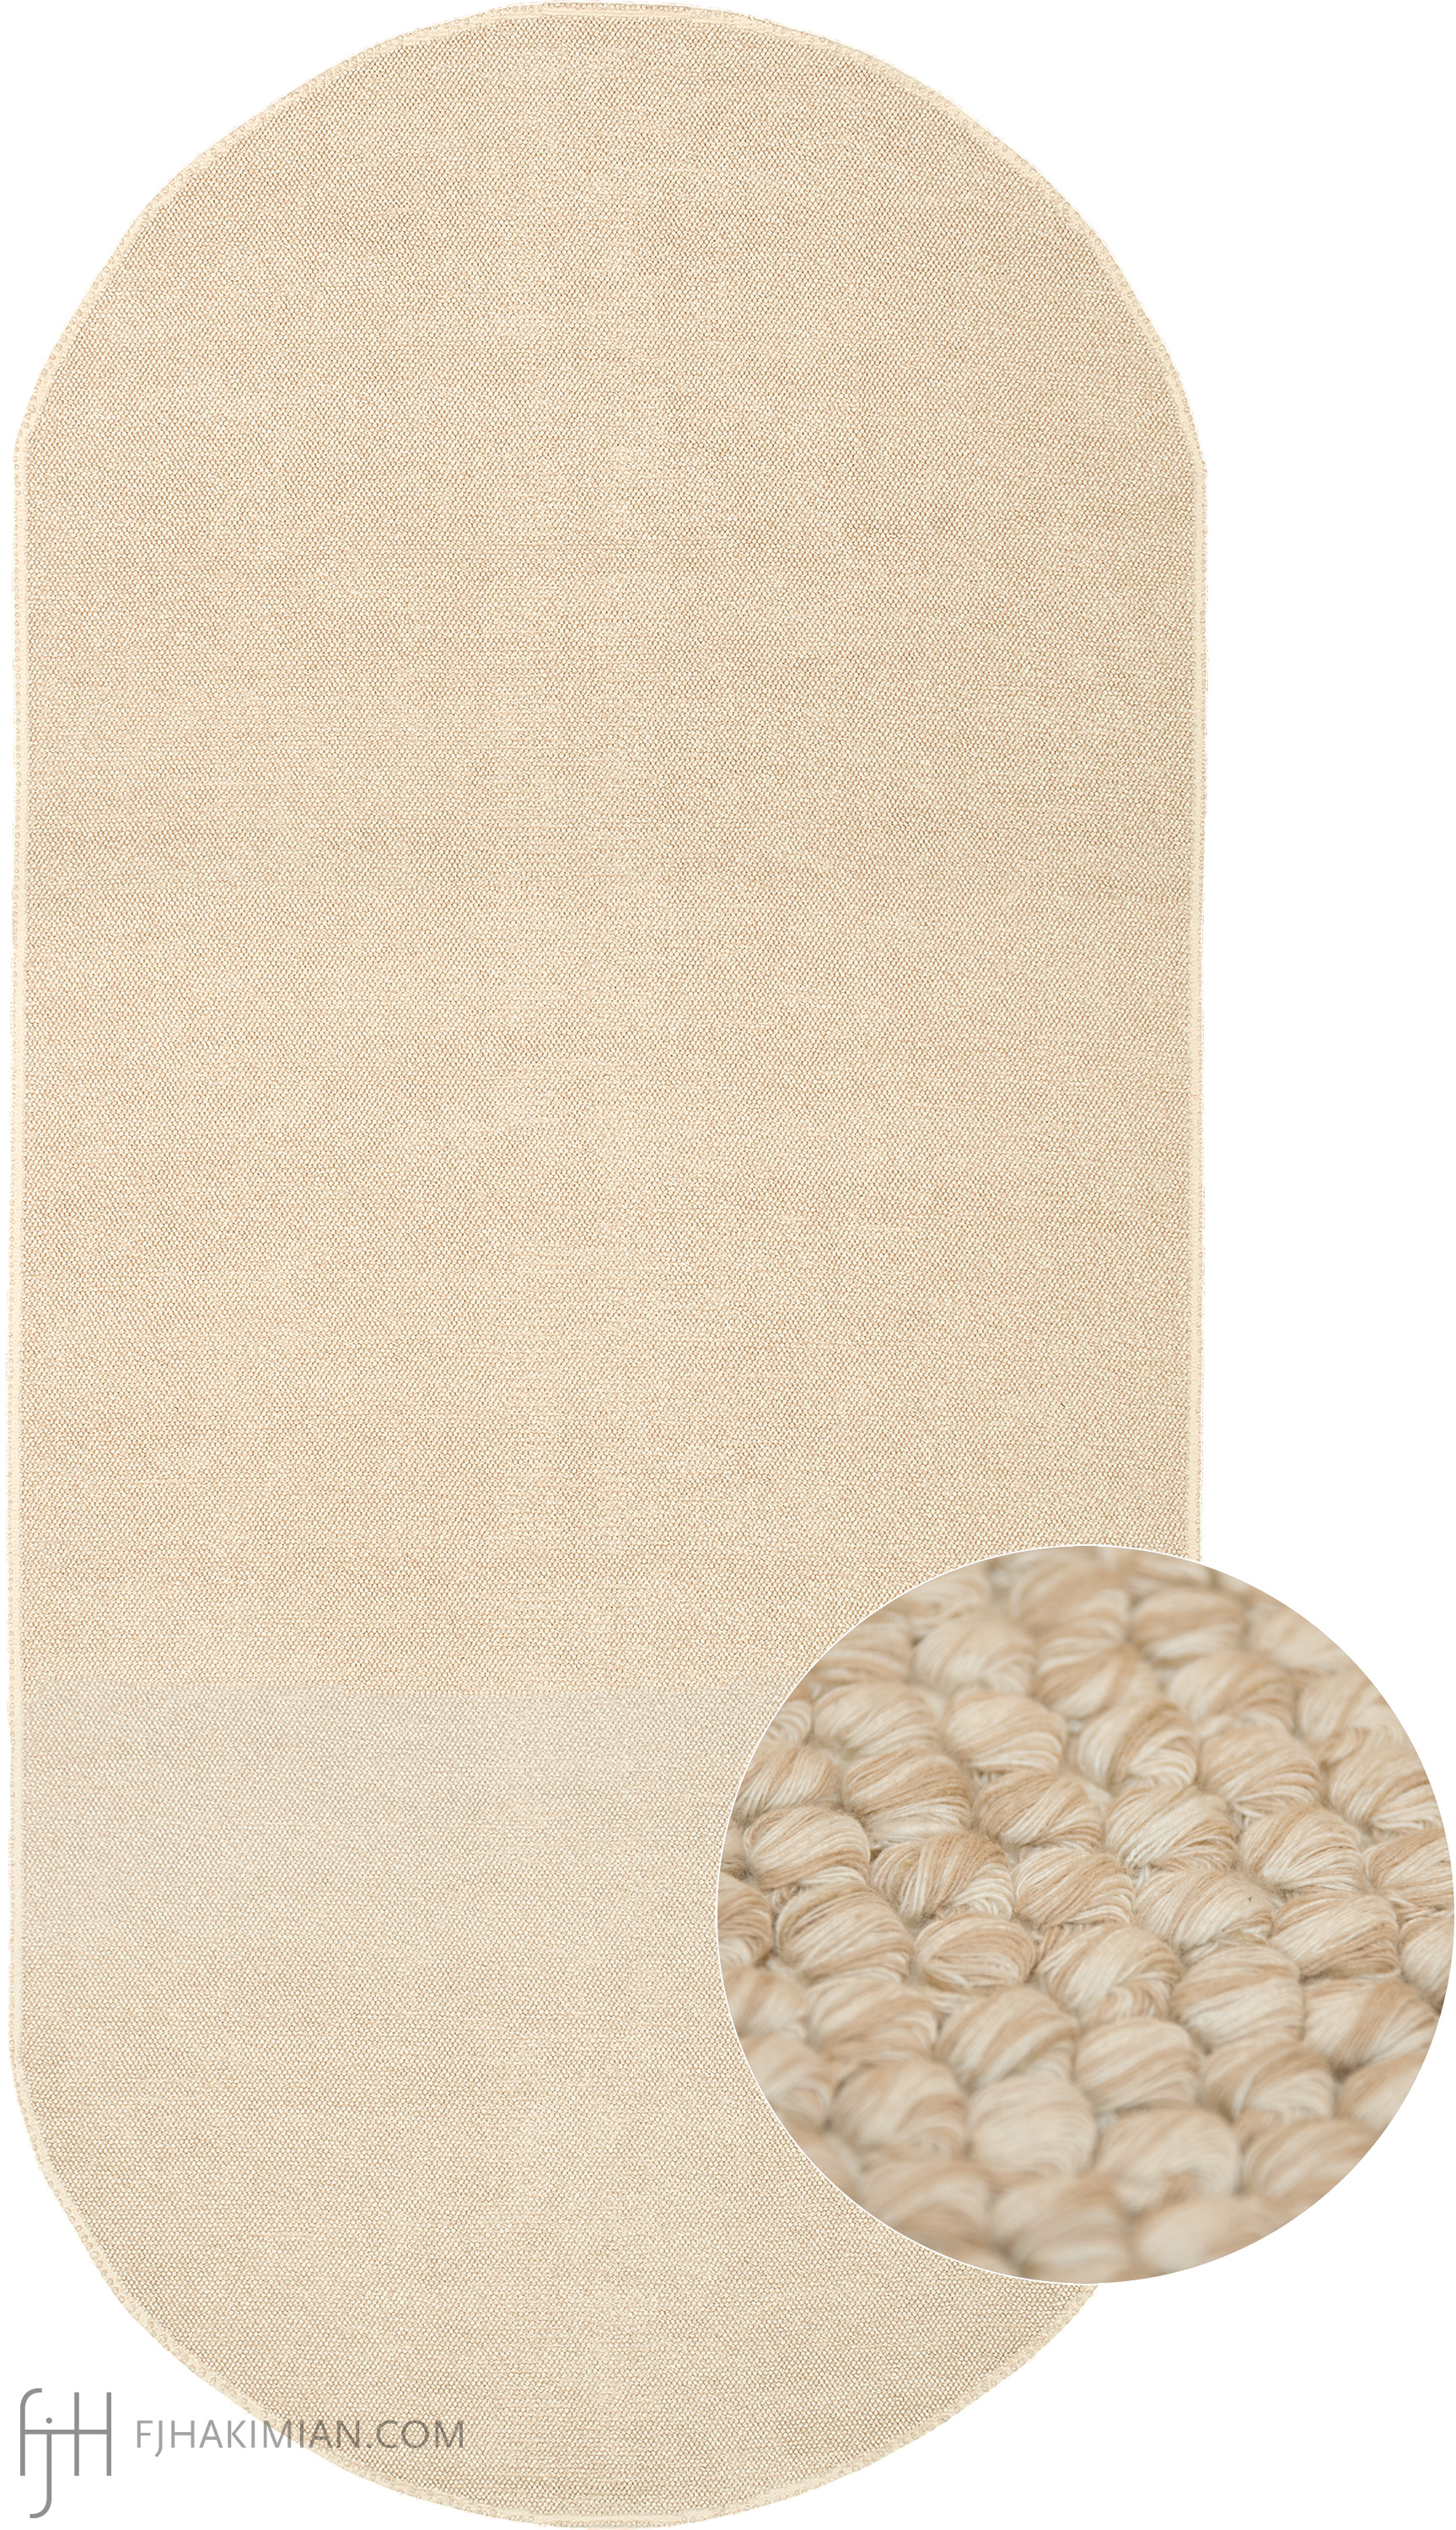 26566 | Rice Stitch Design | Custom Sardinian Carpet | FJ Hakimian | Carpet Gallery in NYC